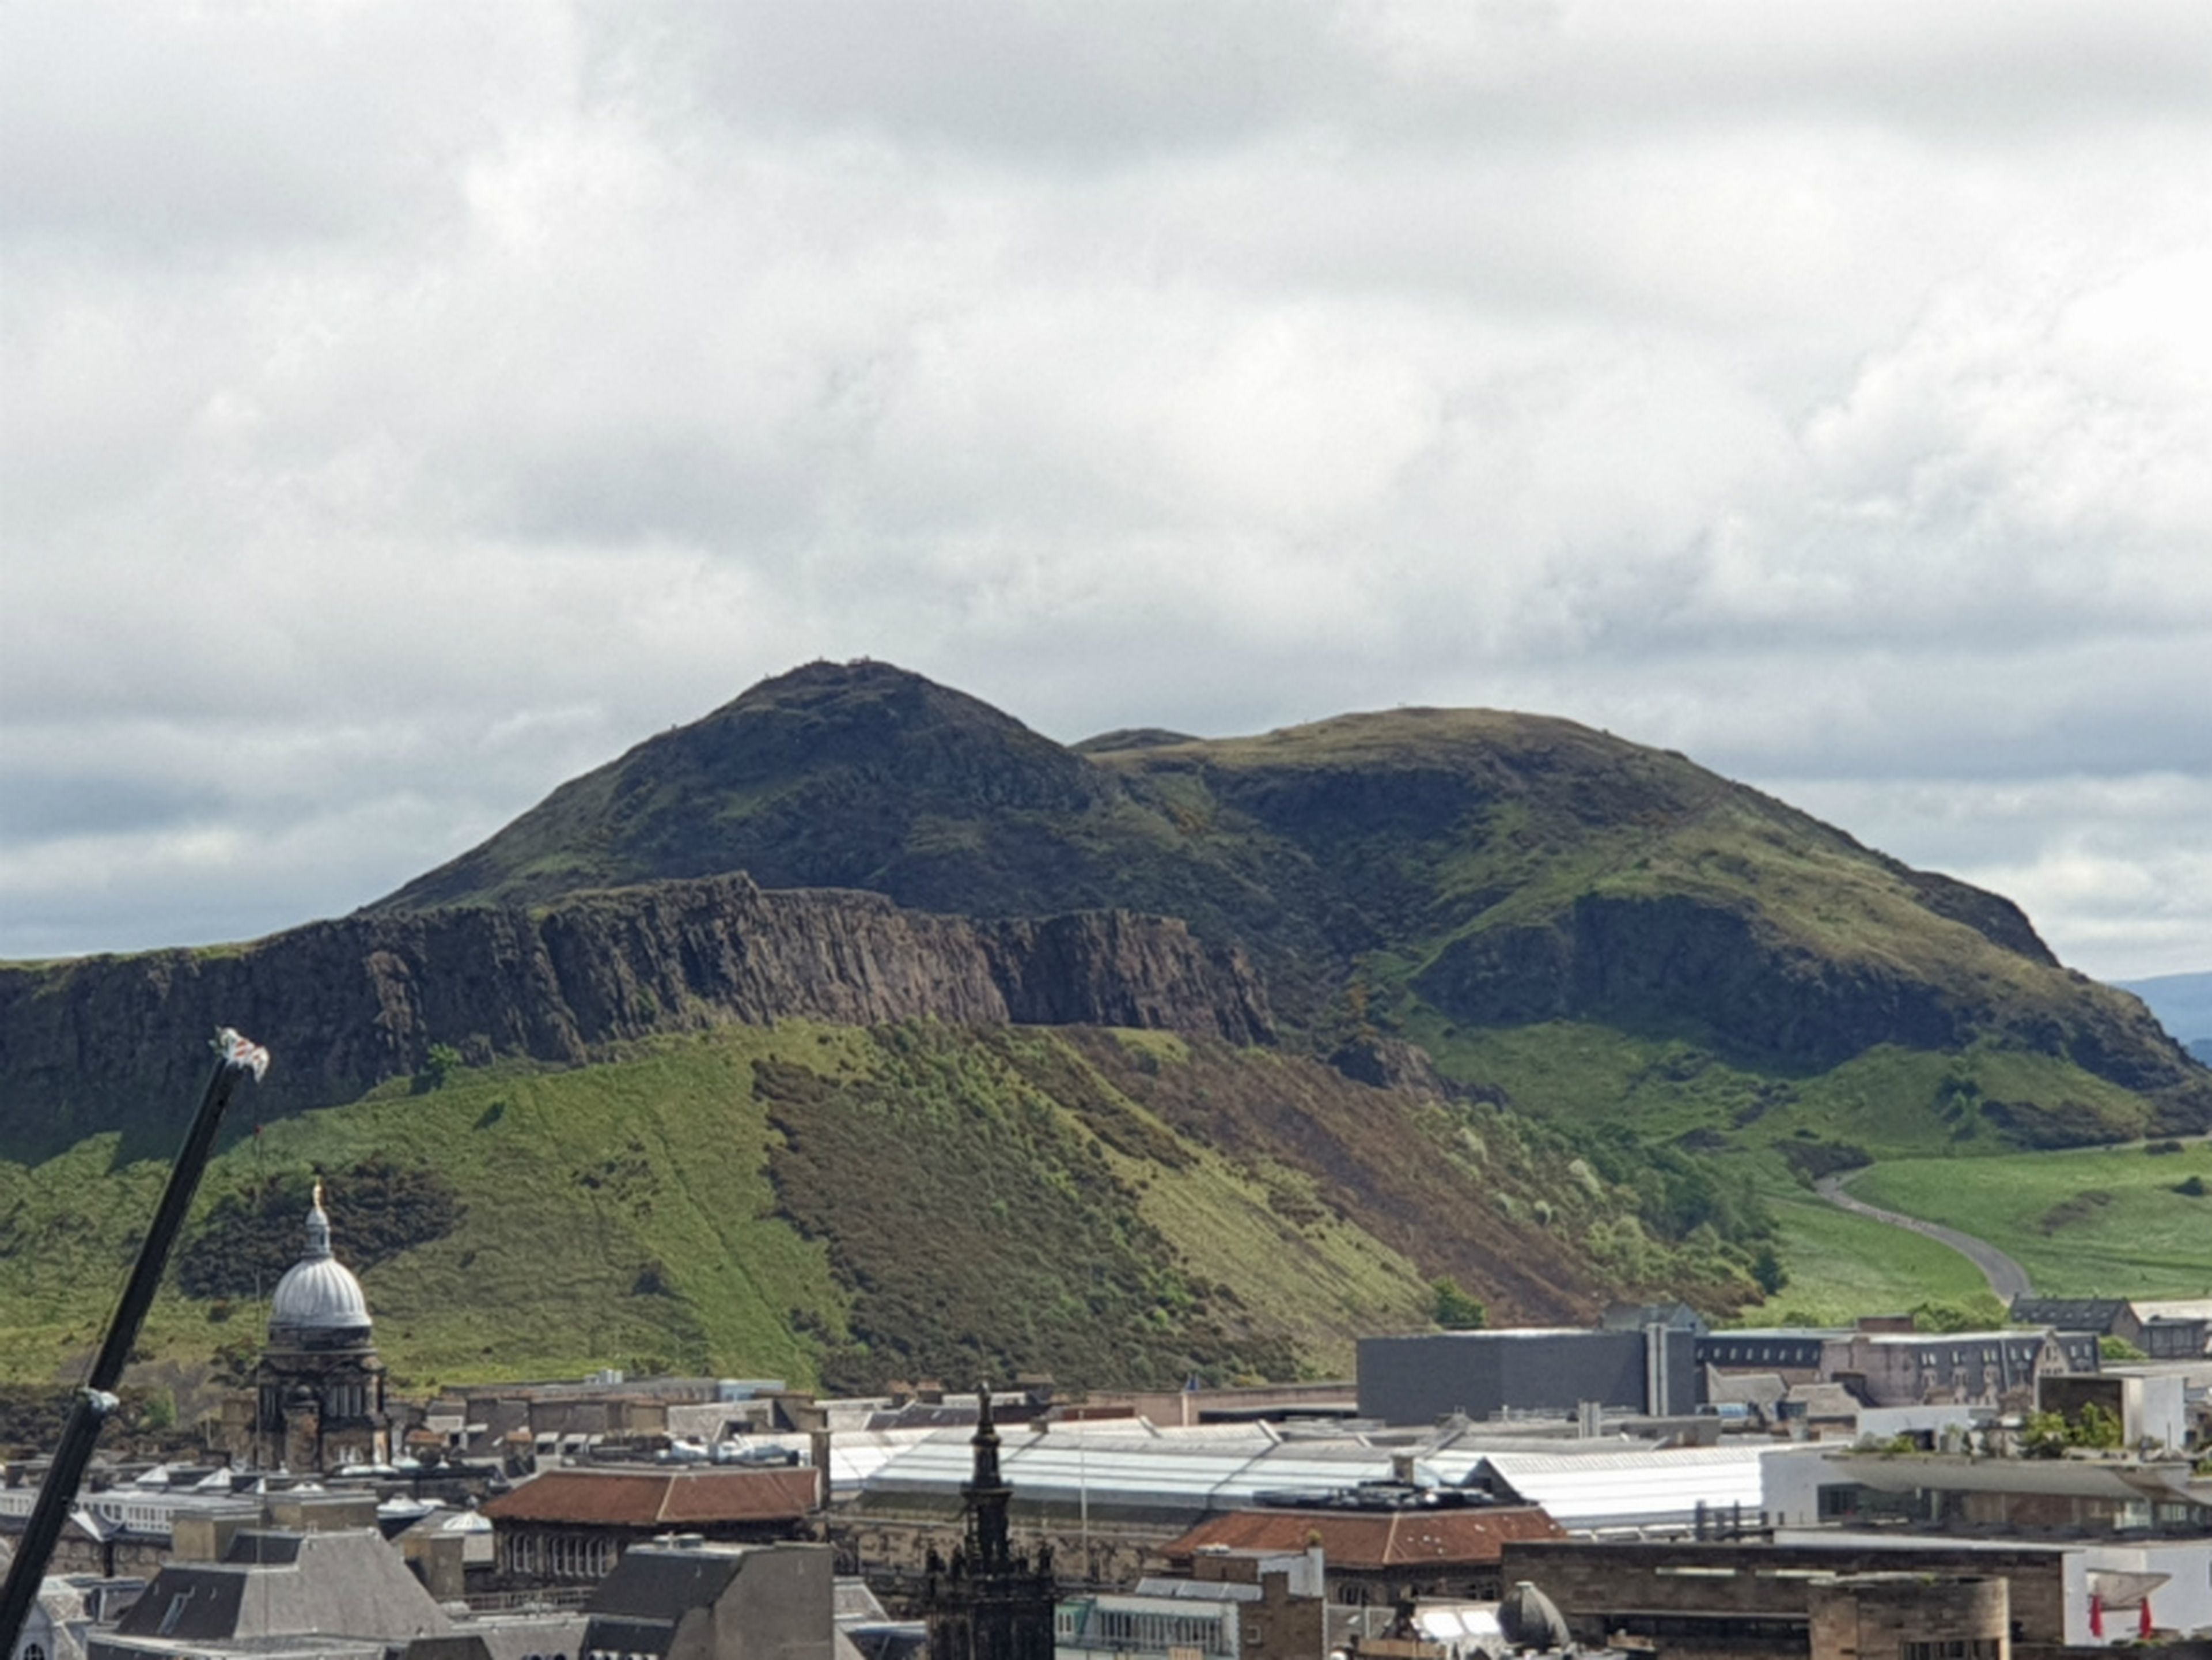 Las colinas de Arthur's seat en Edimburgo.